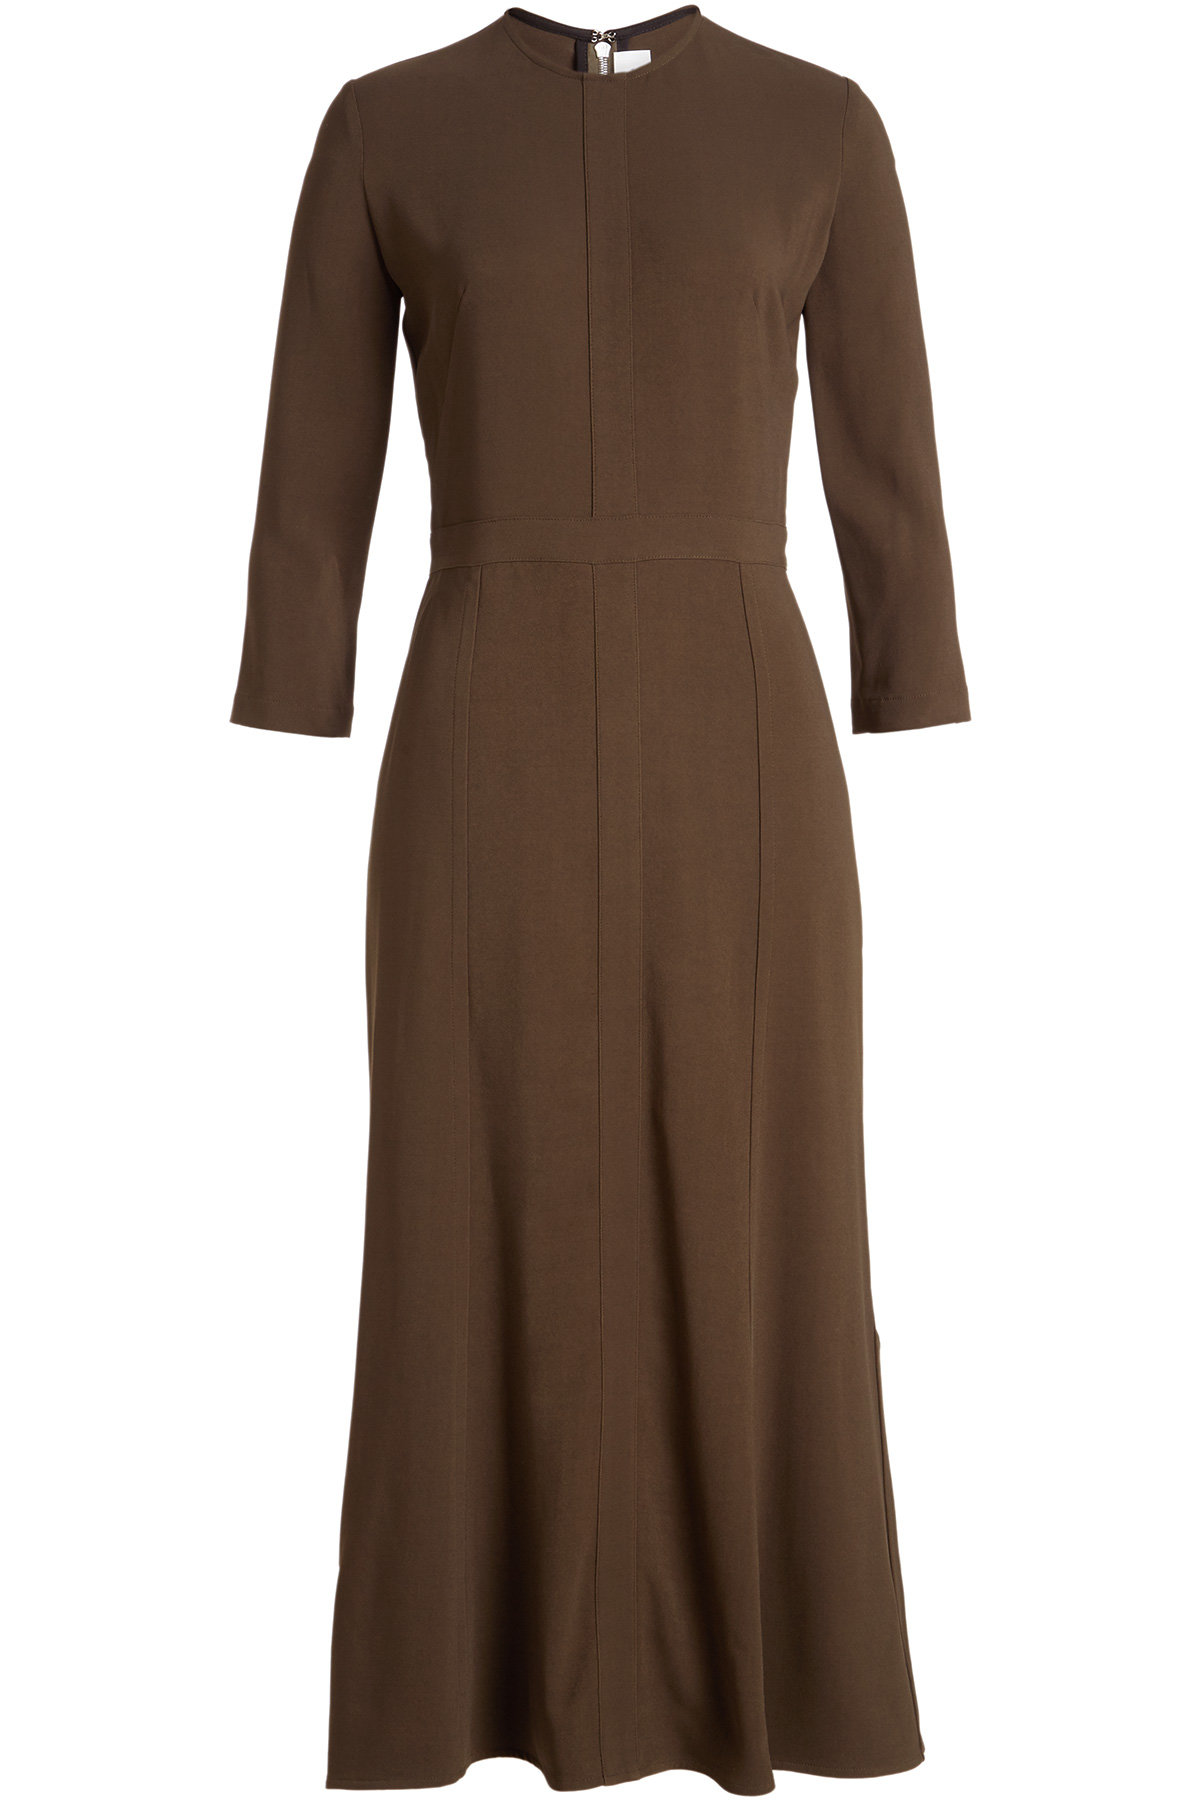 Panelled Dress by Victoria Beckham